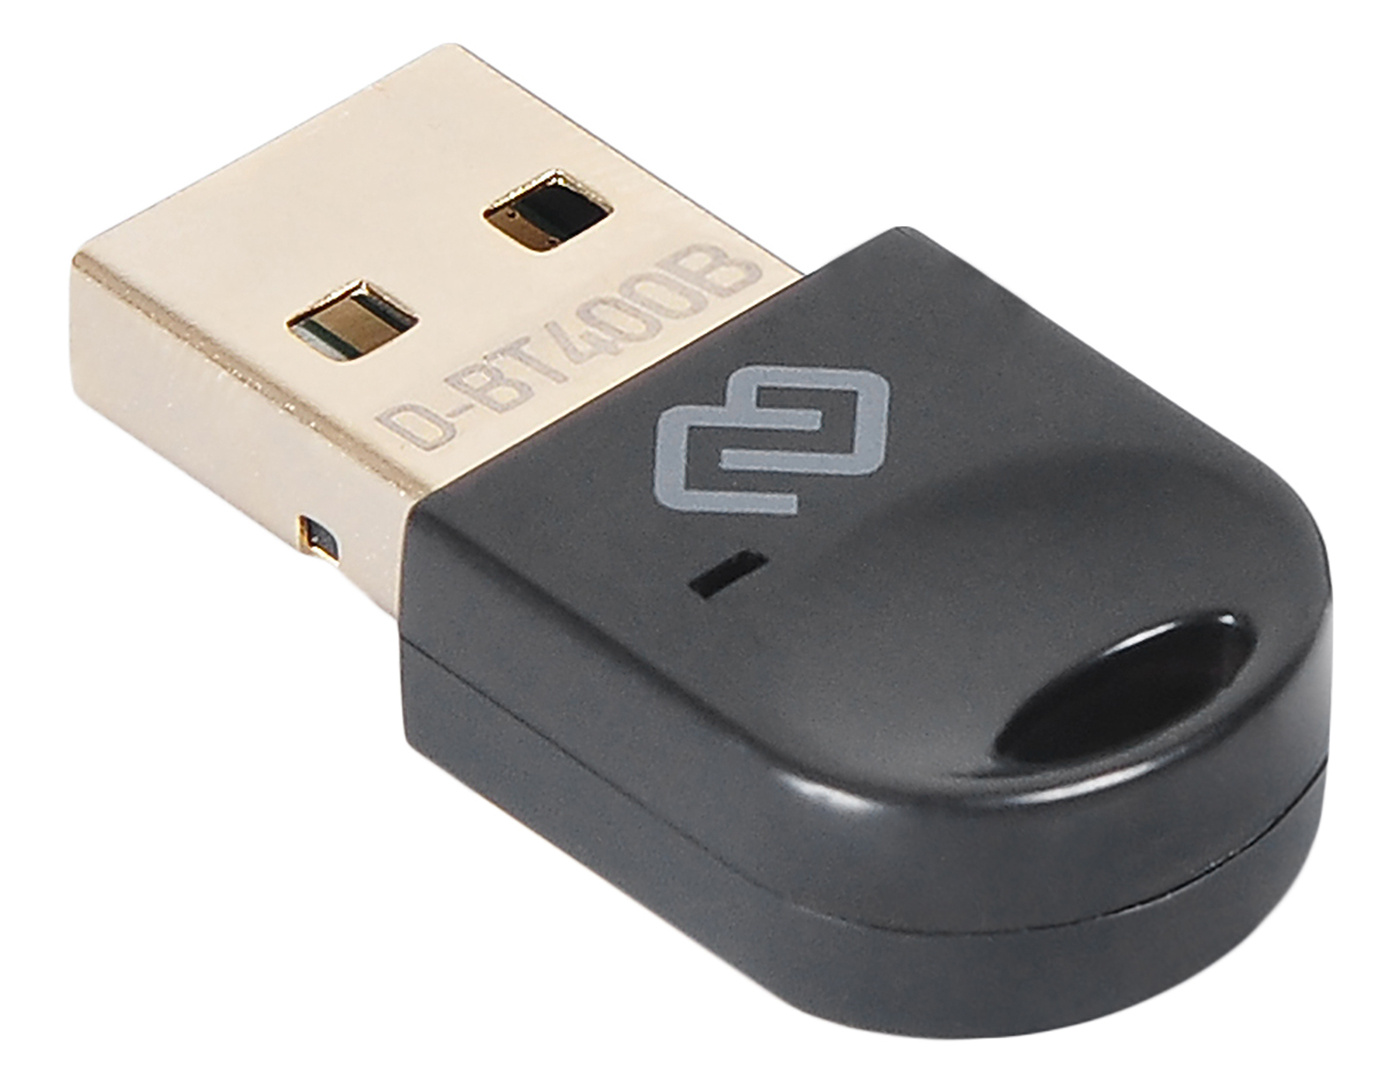 Адаптер USB Digma D-BT400B